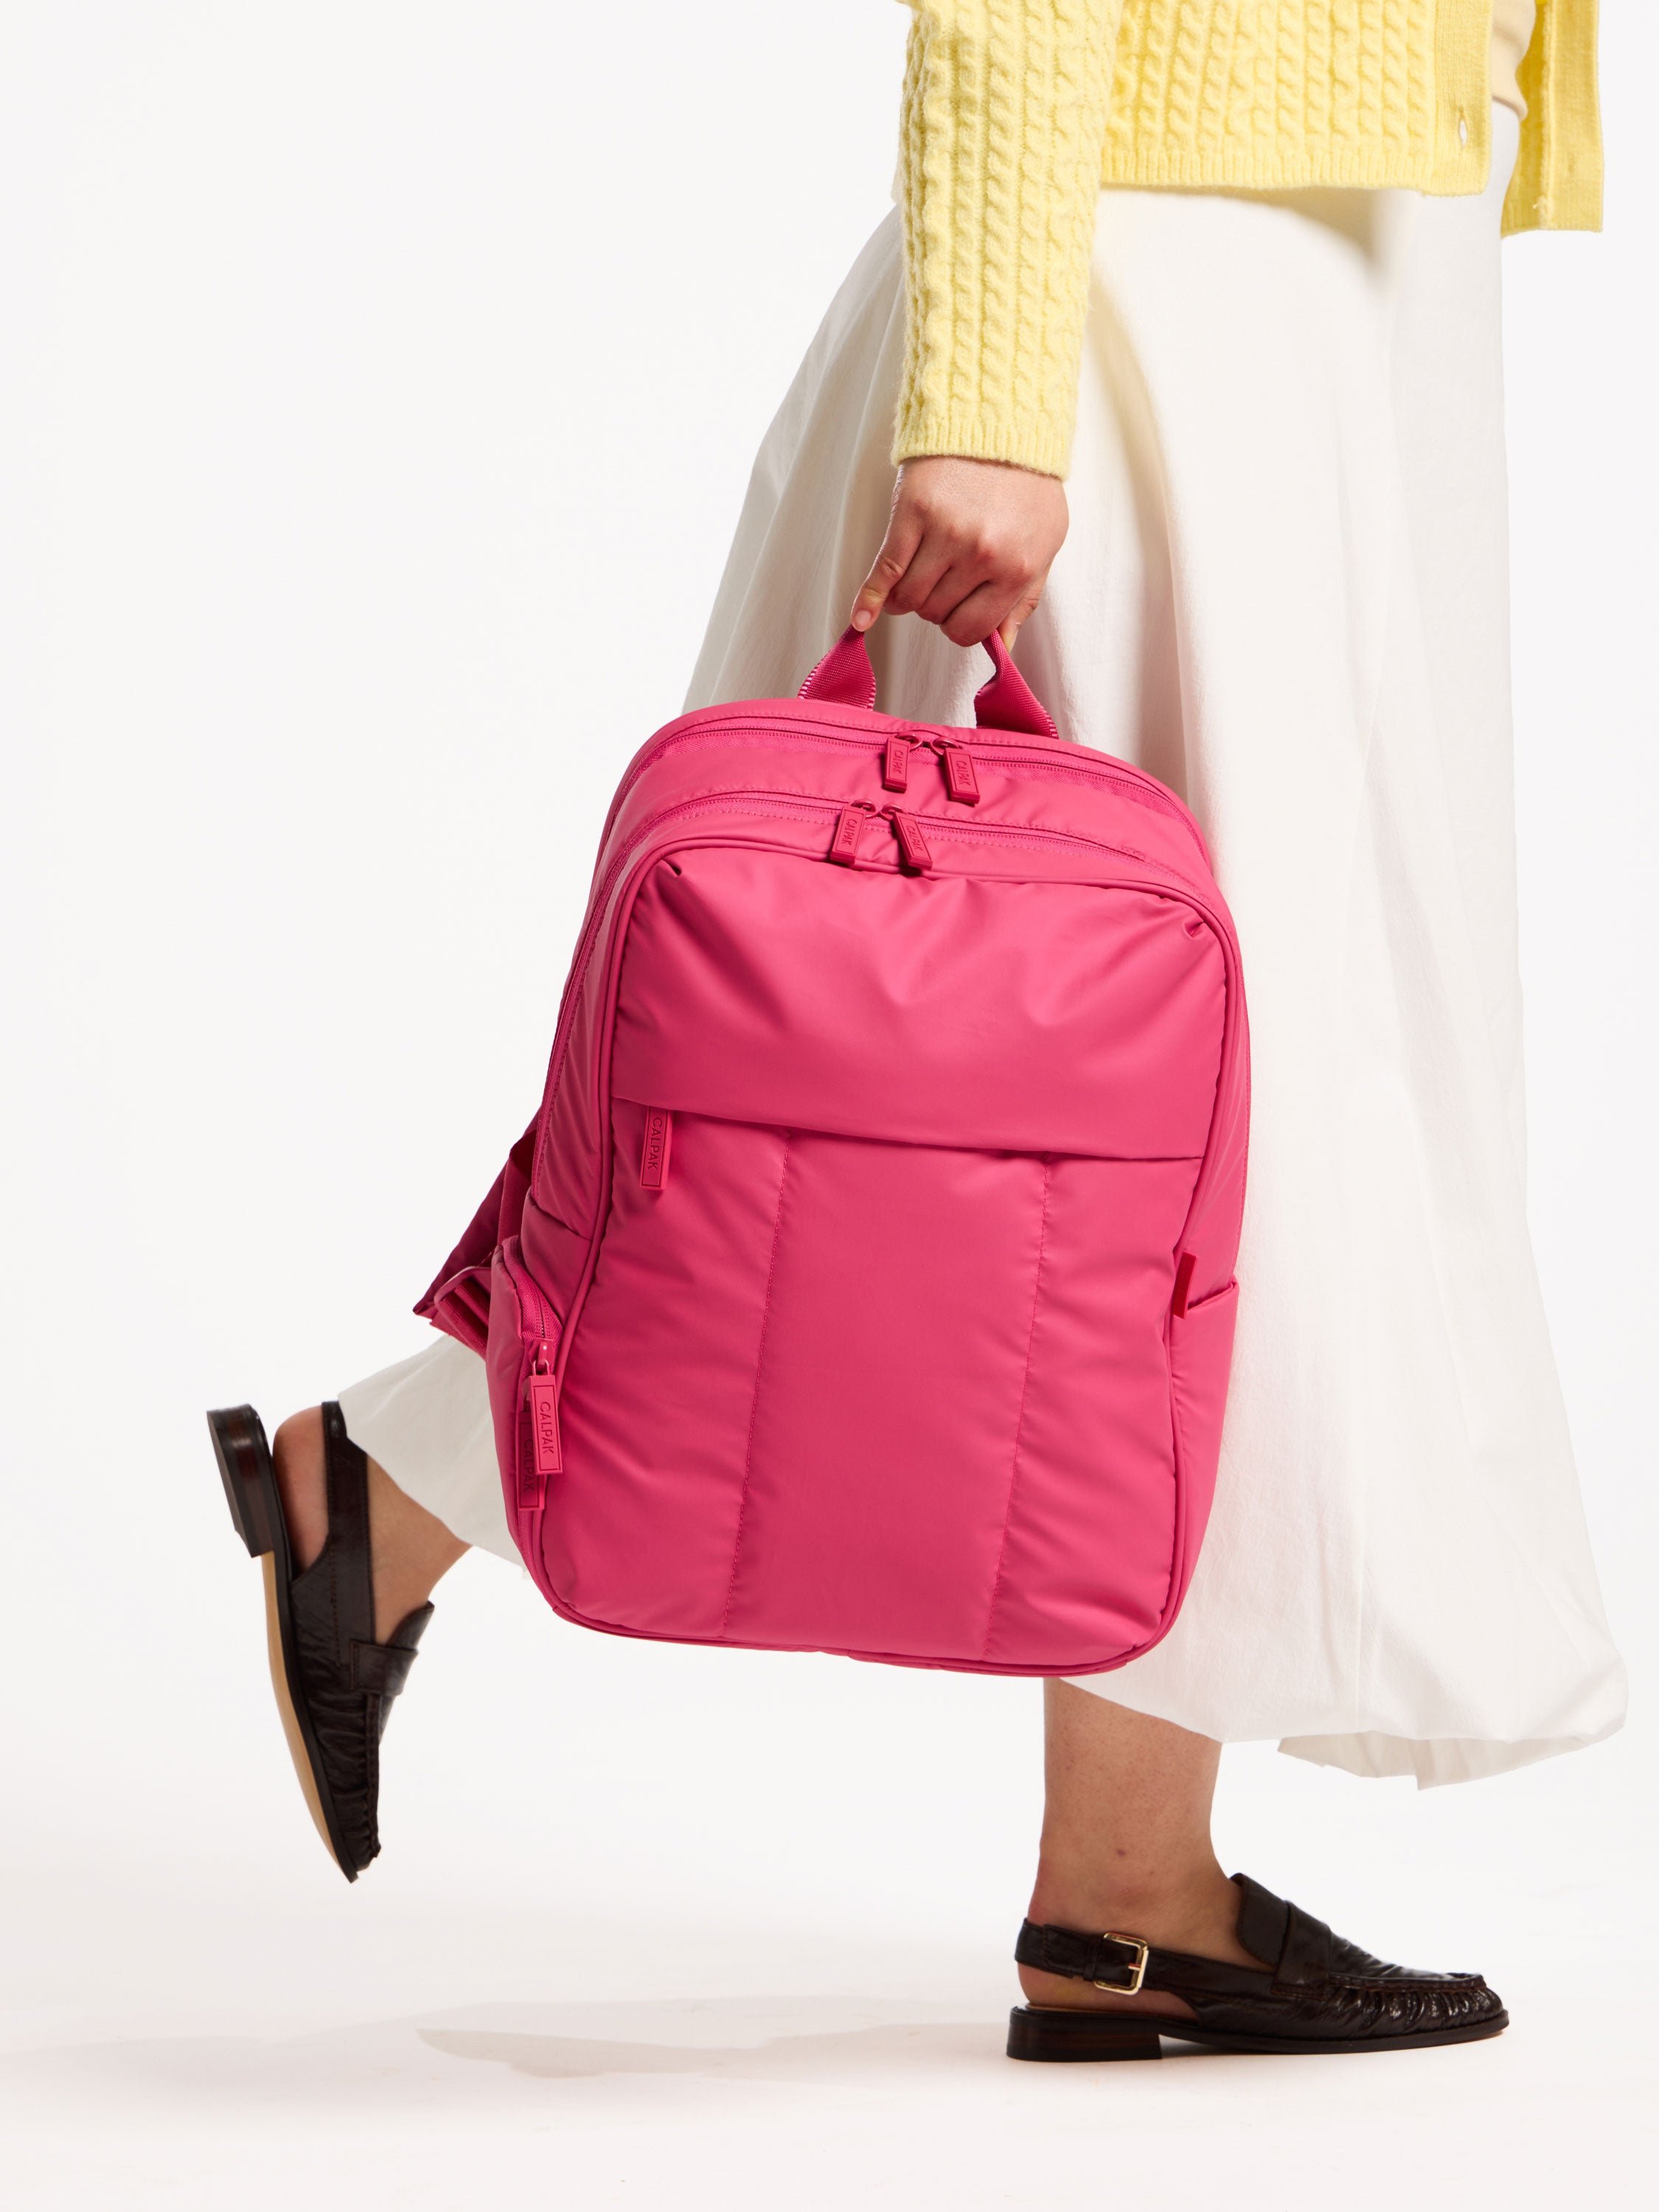 Model holding CALPAK luka 15 inch laptop backpack by top handle in dragonfruit